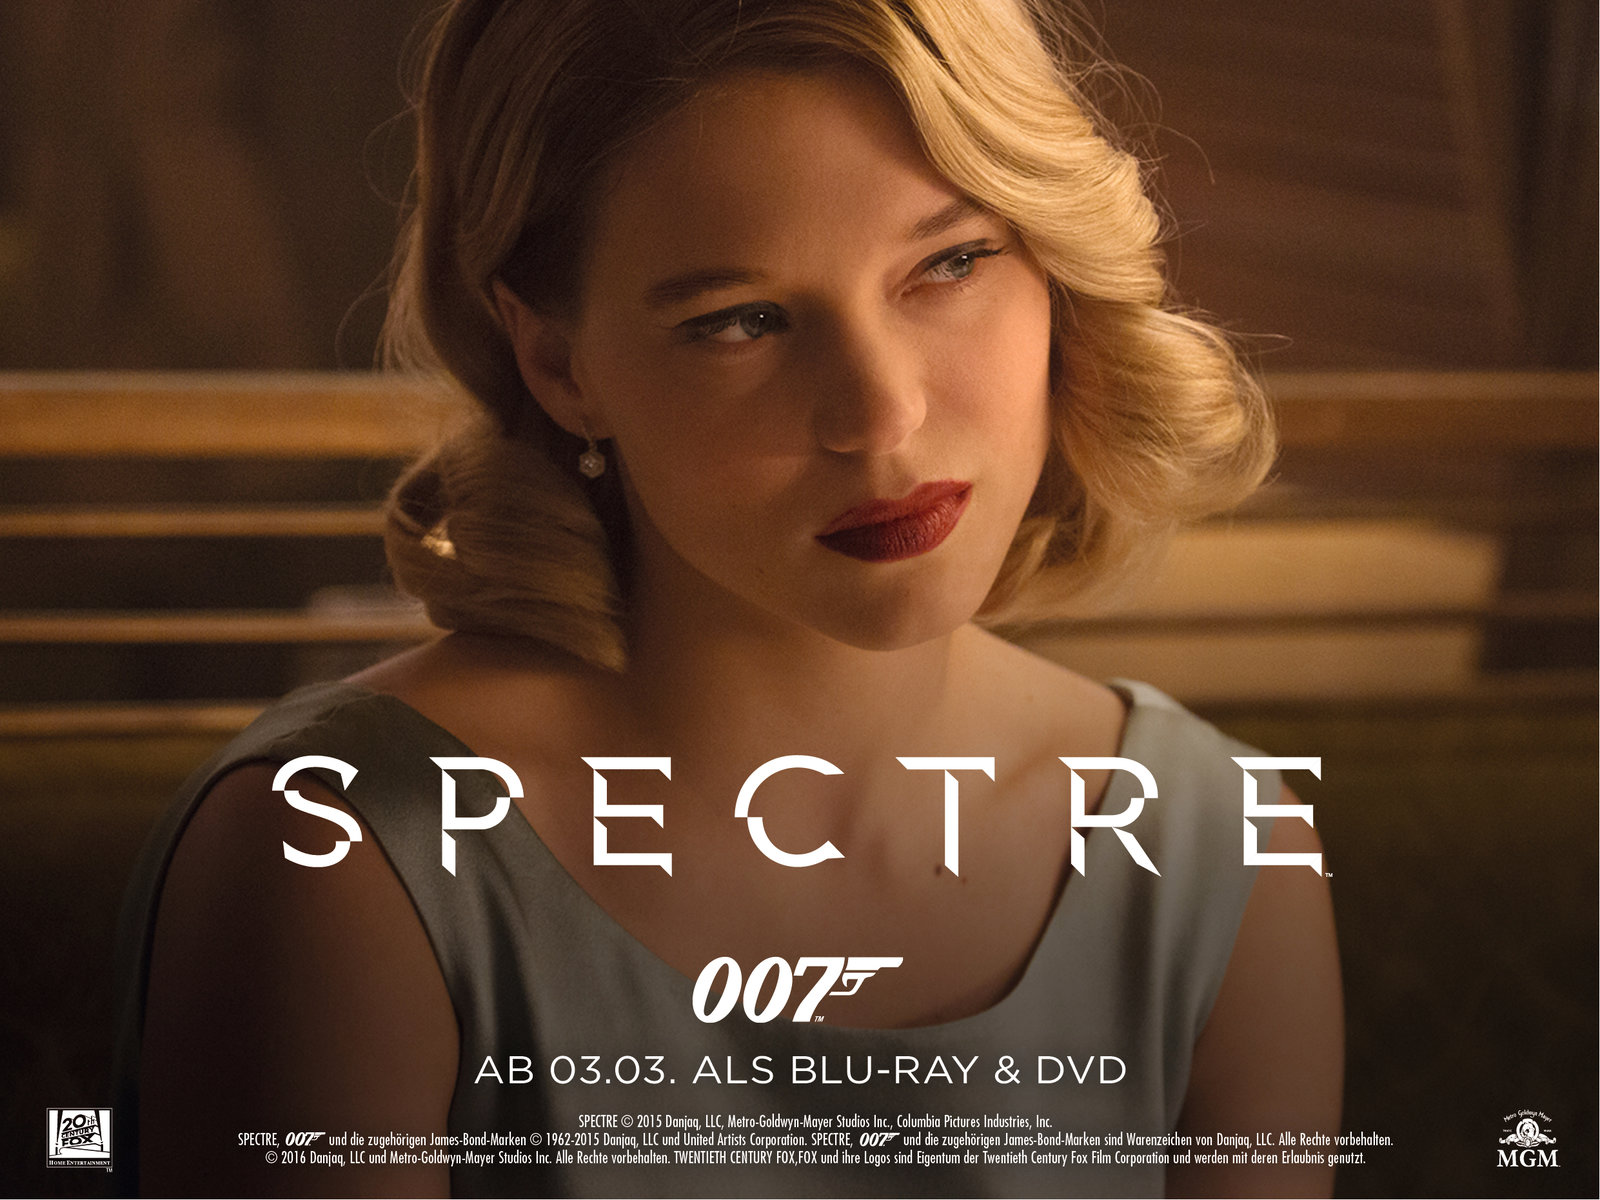 James Bond 007 - Spectre (blu-ray)